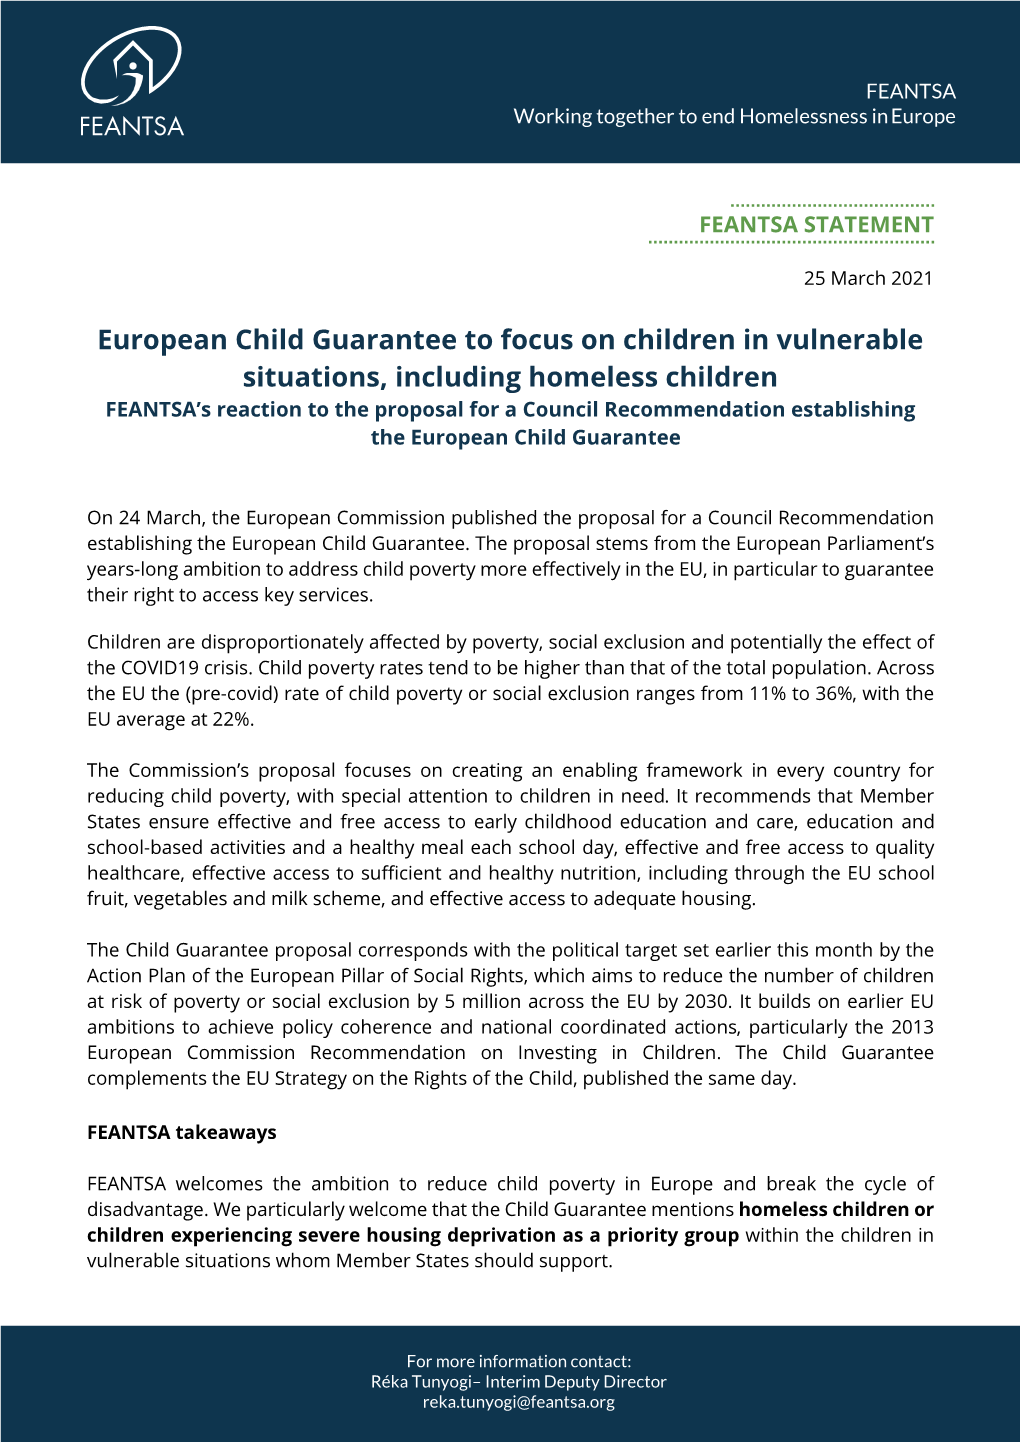 European Child Guarantee to Focus on Children in Vulnerable